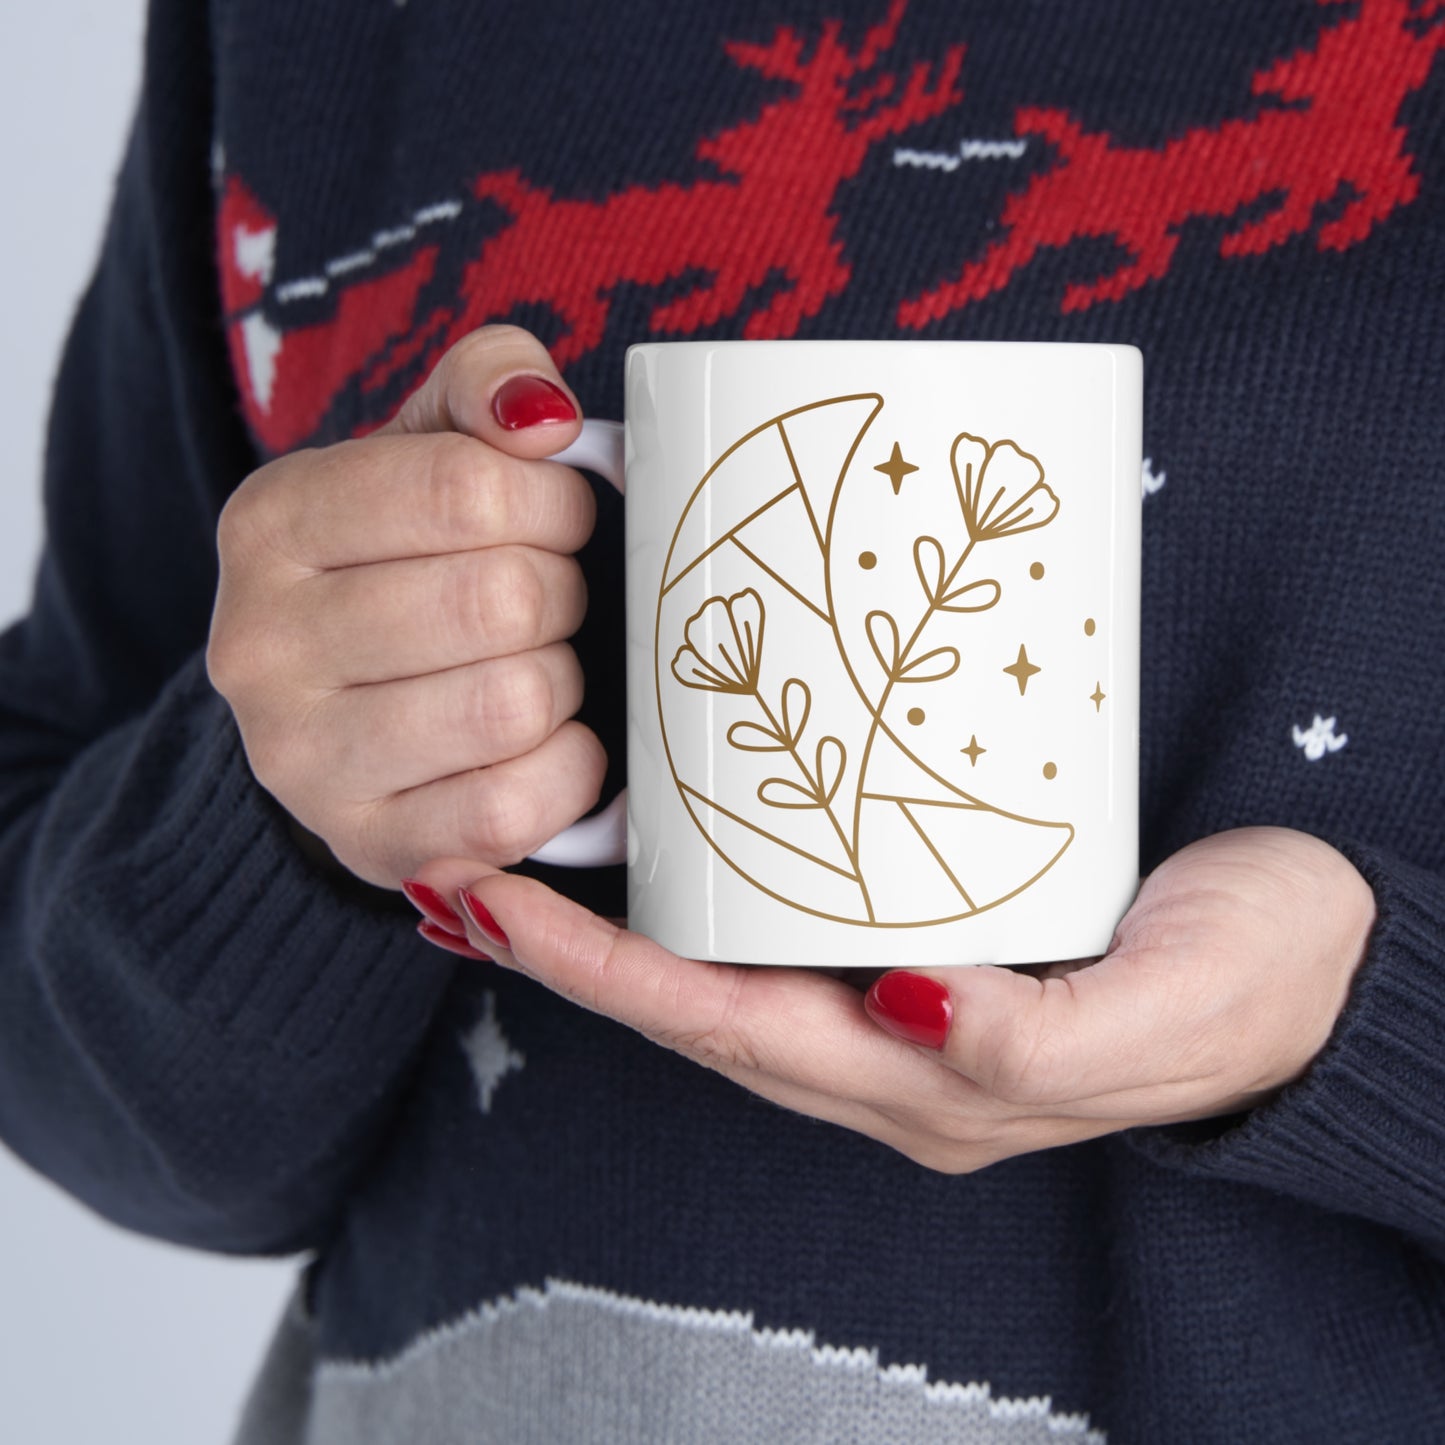 Earthy Coffee Cup, Moon and stars, Flower Mug, Positive Coffee Cup